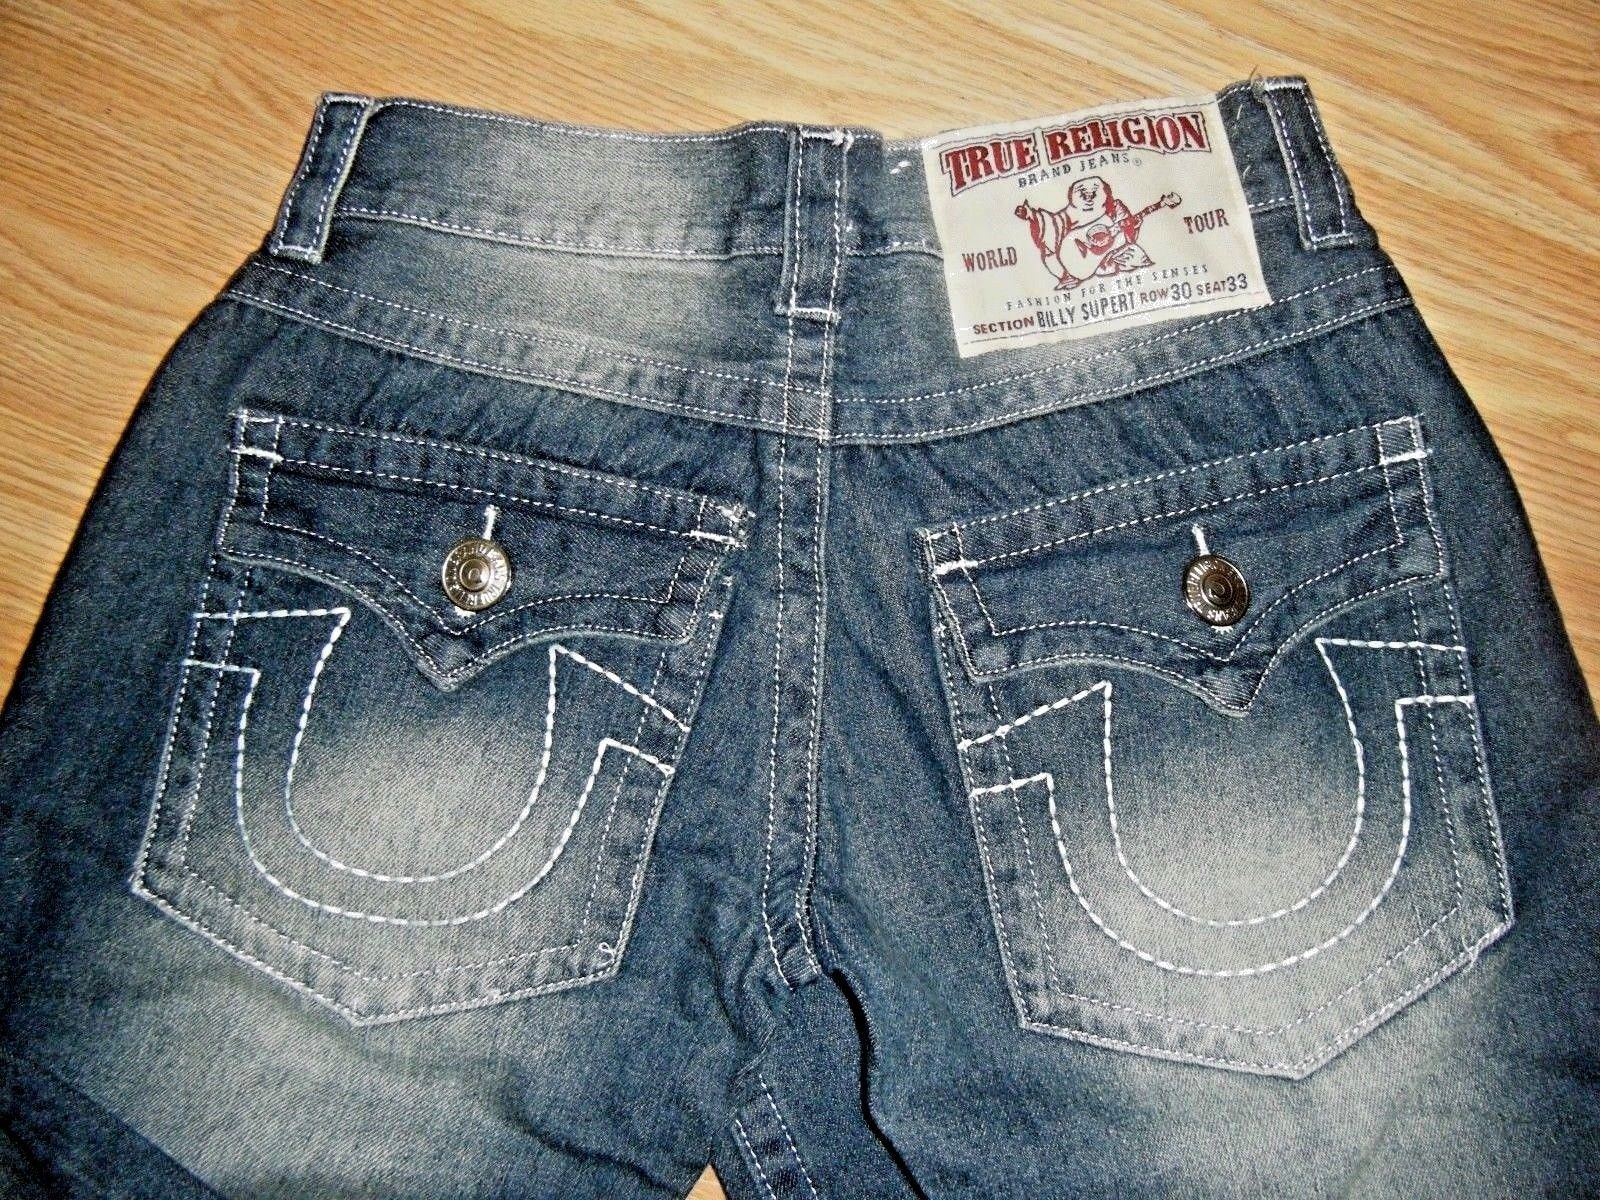 true religion brand jeans world tour fashion for the senses